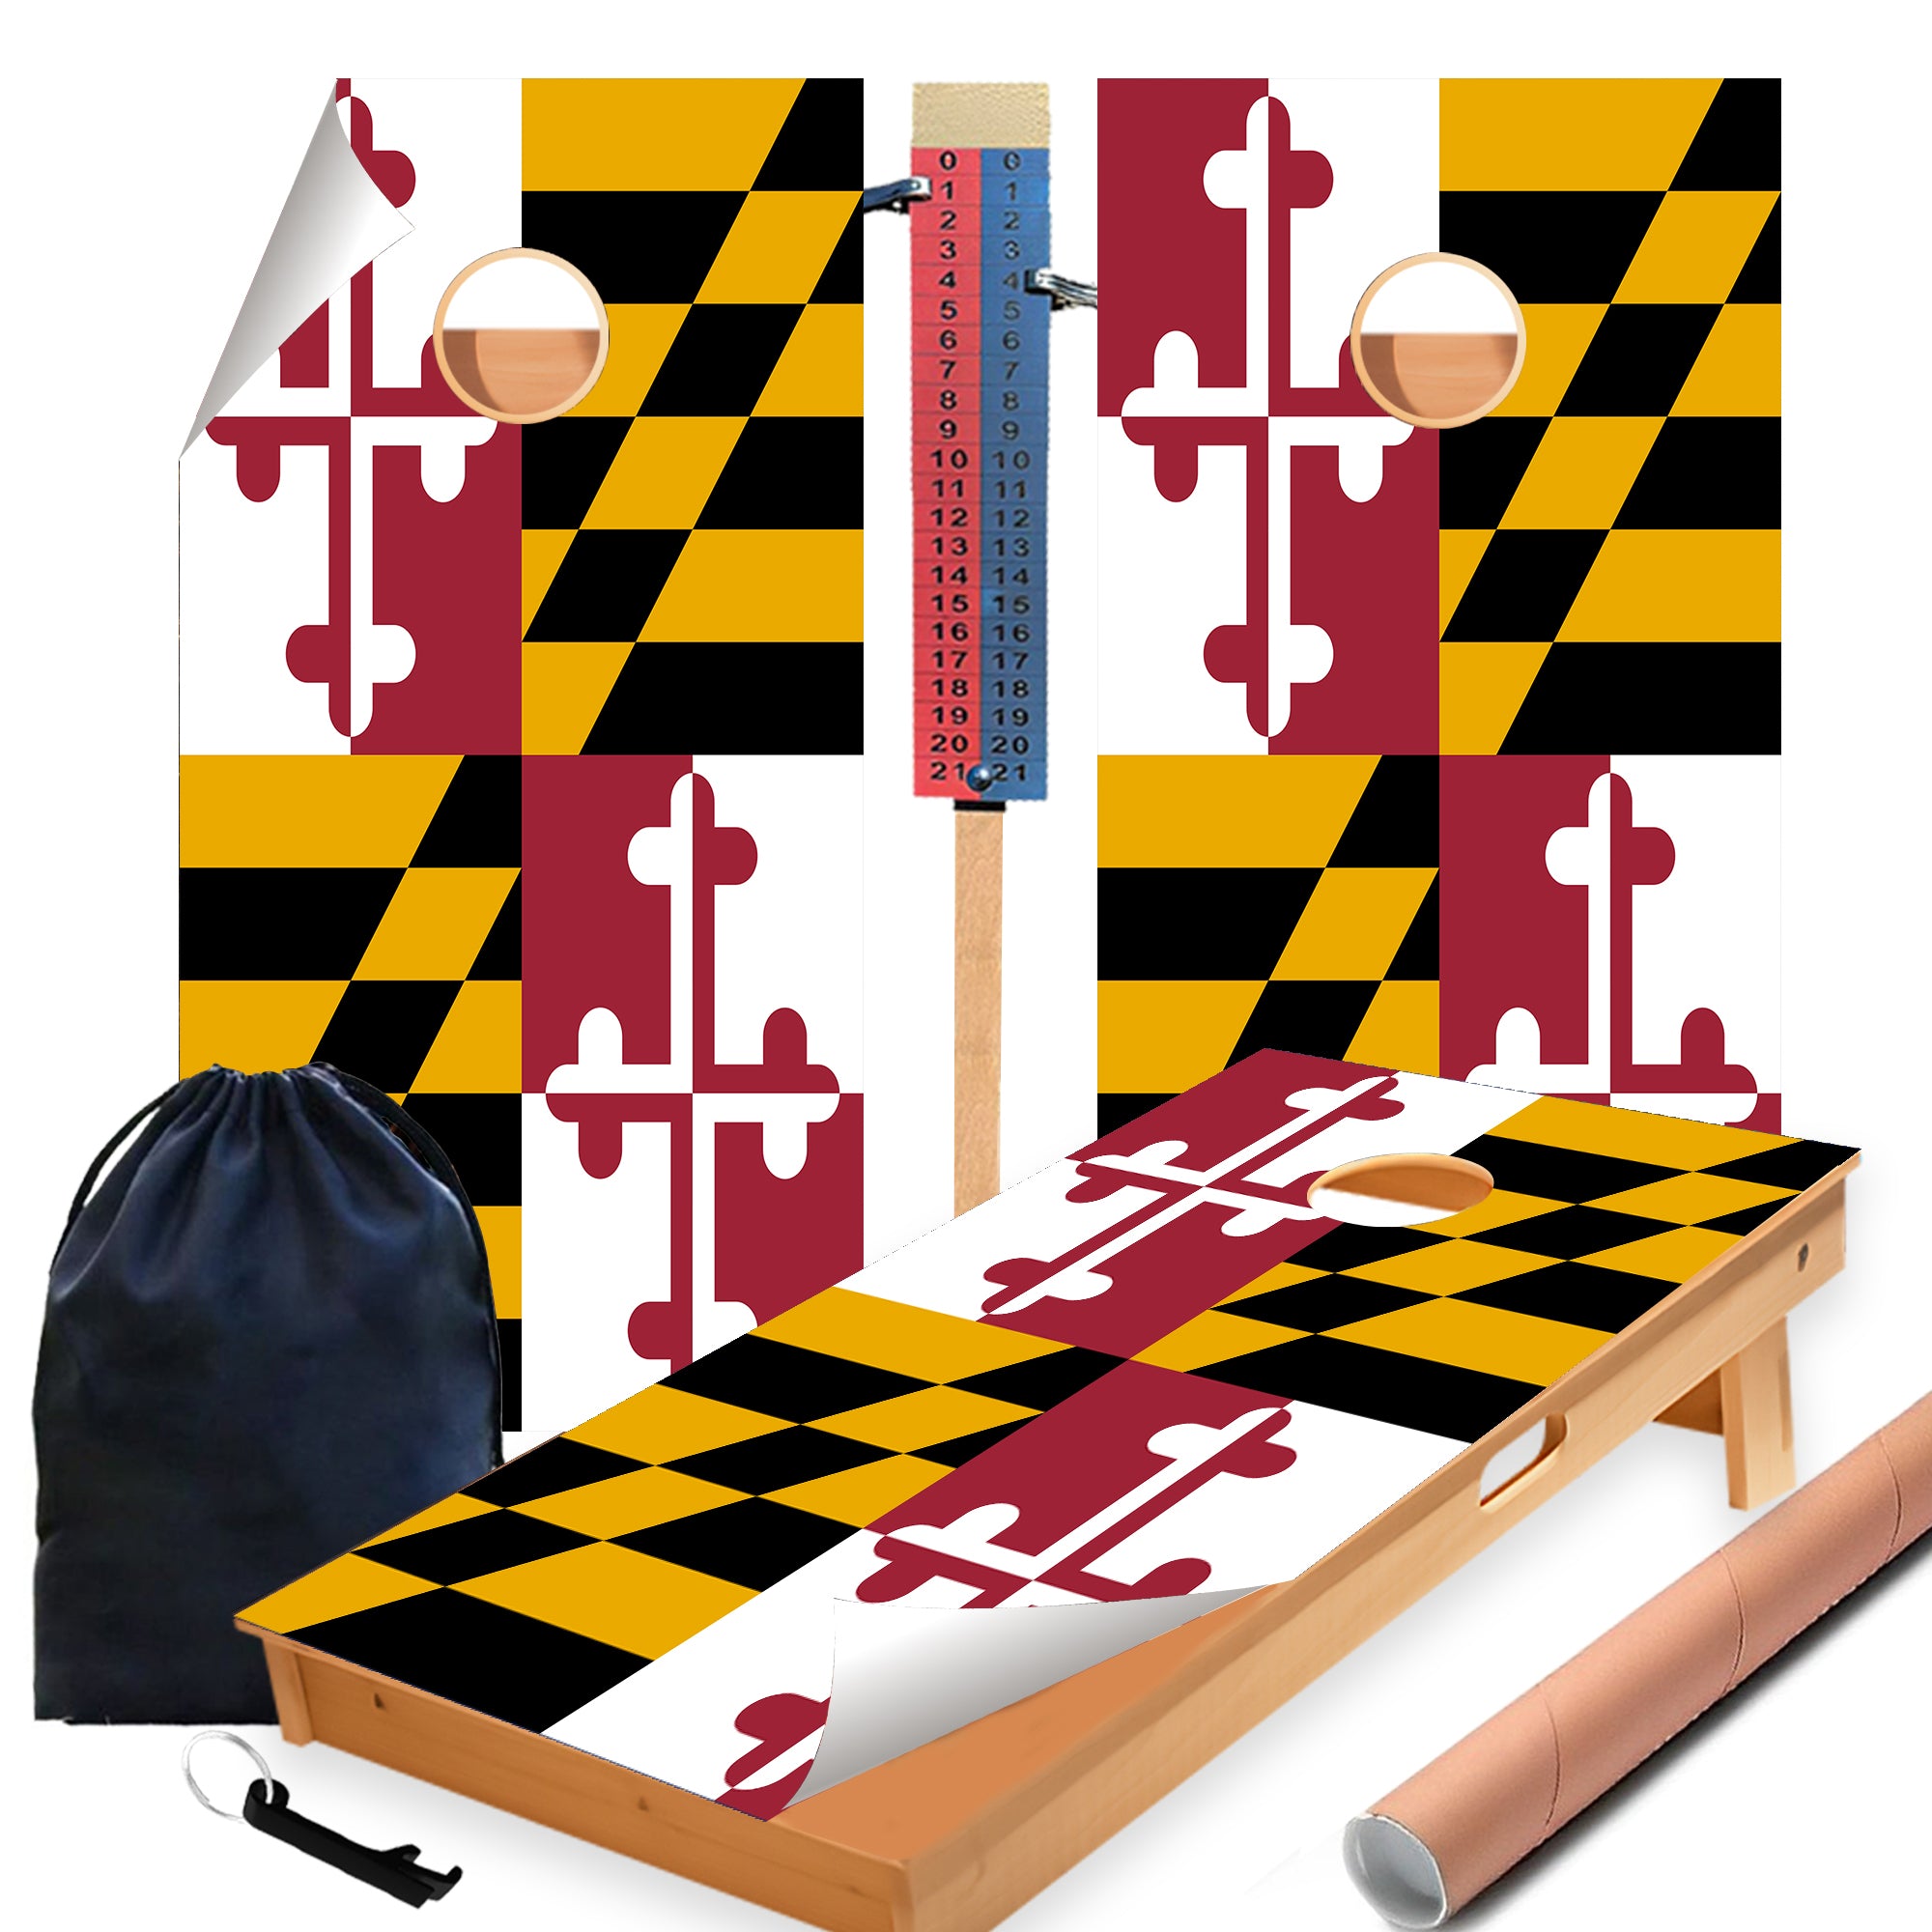 Maryland Classic State Flag Cornhole Boards Wraps (Set of 2)